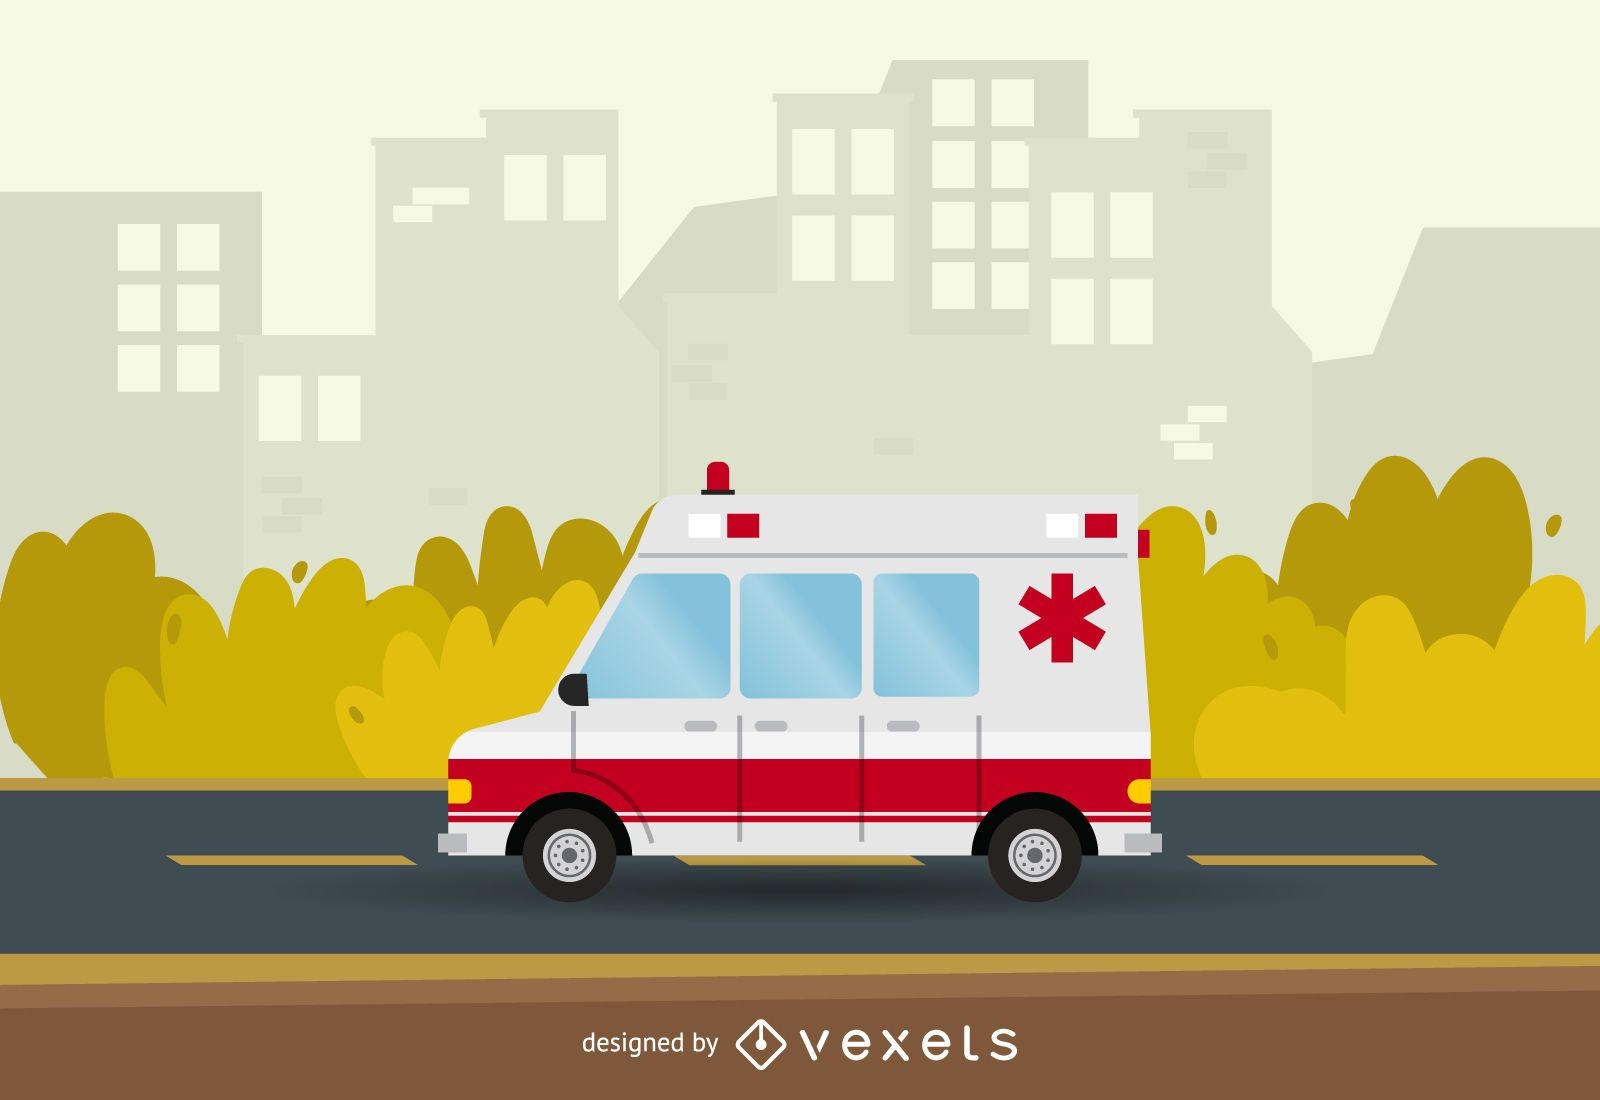 Hospital Ambulance Illustration